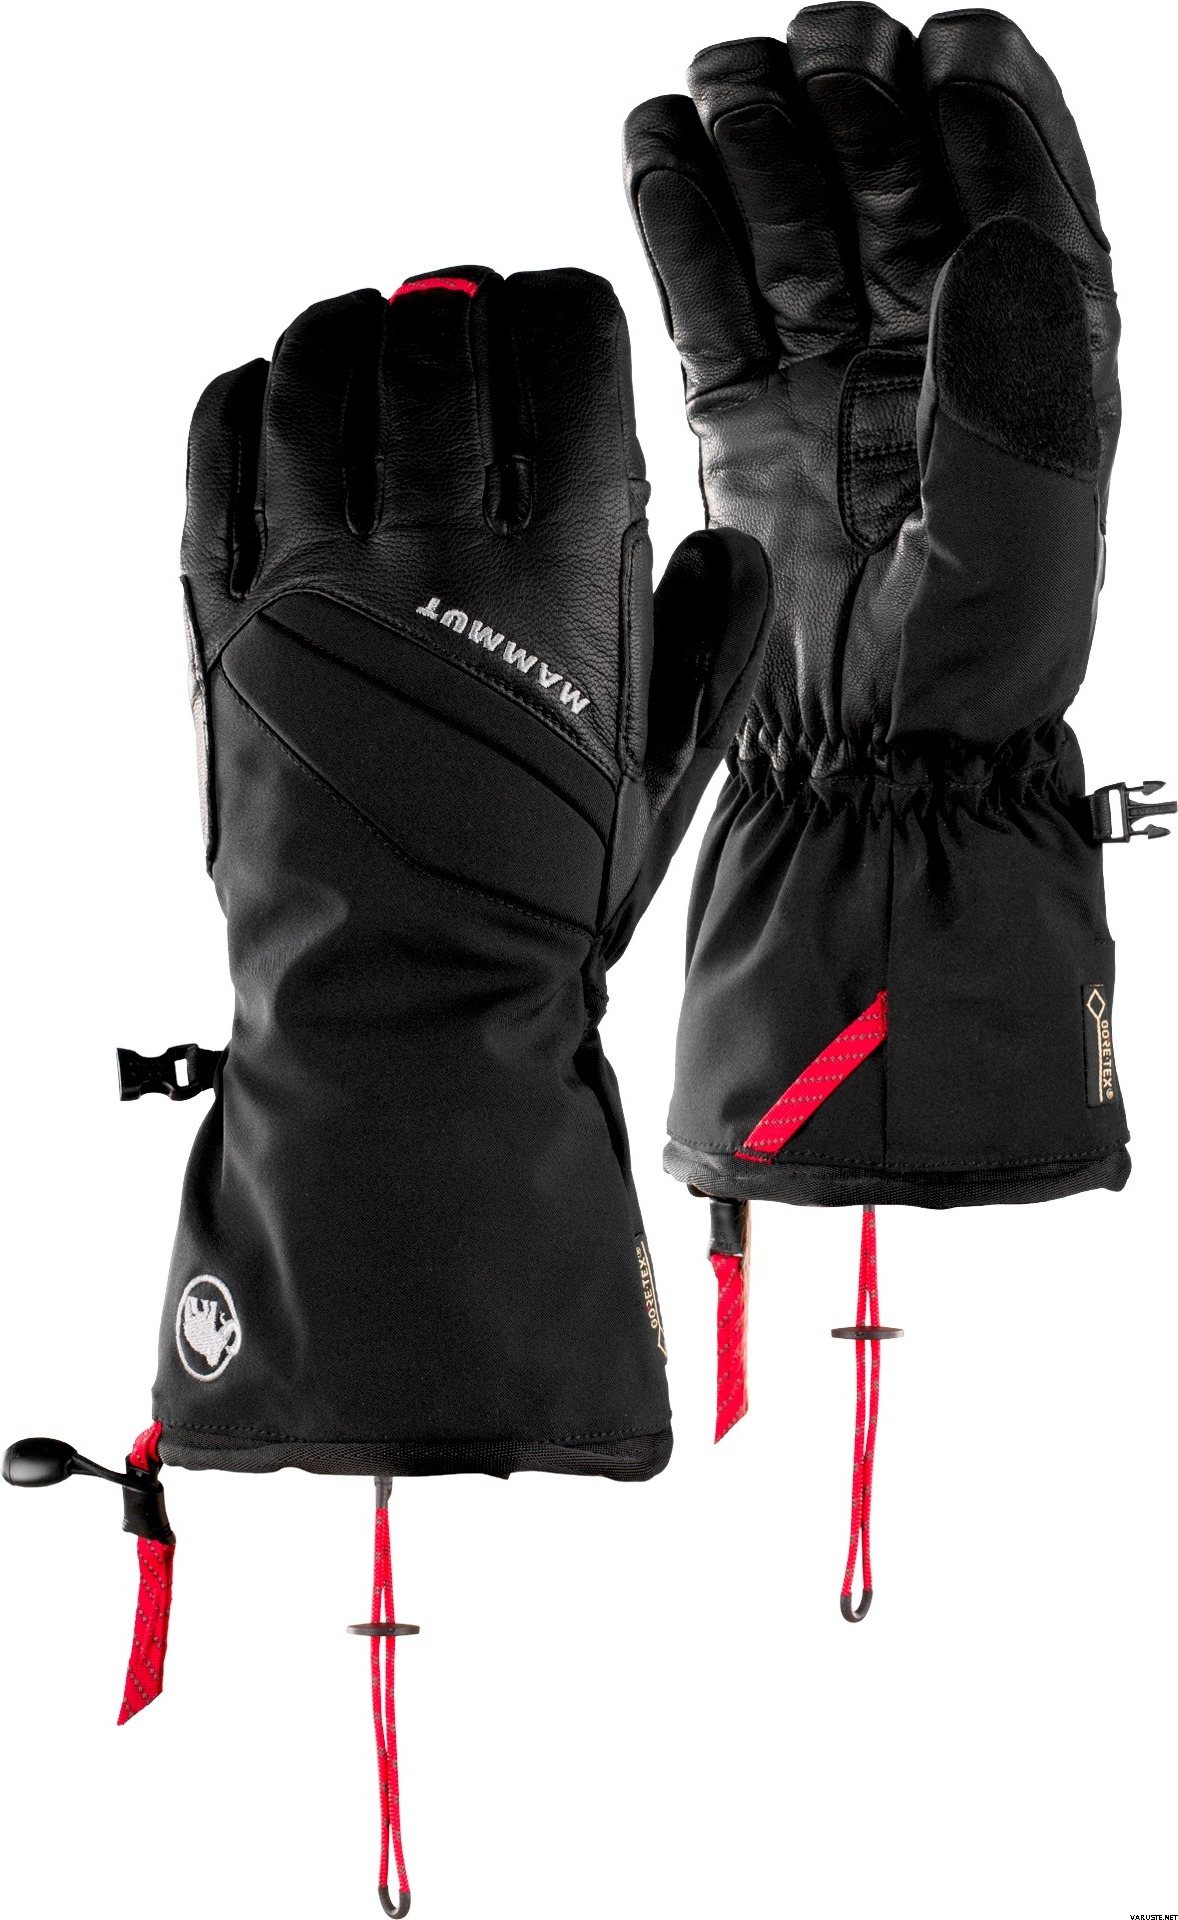 Mammut Meron Thermo 2 in 1 Glove | Downhill ski gloves | Varuste.net ...